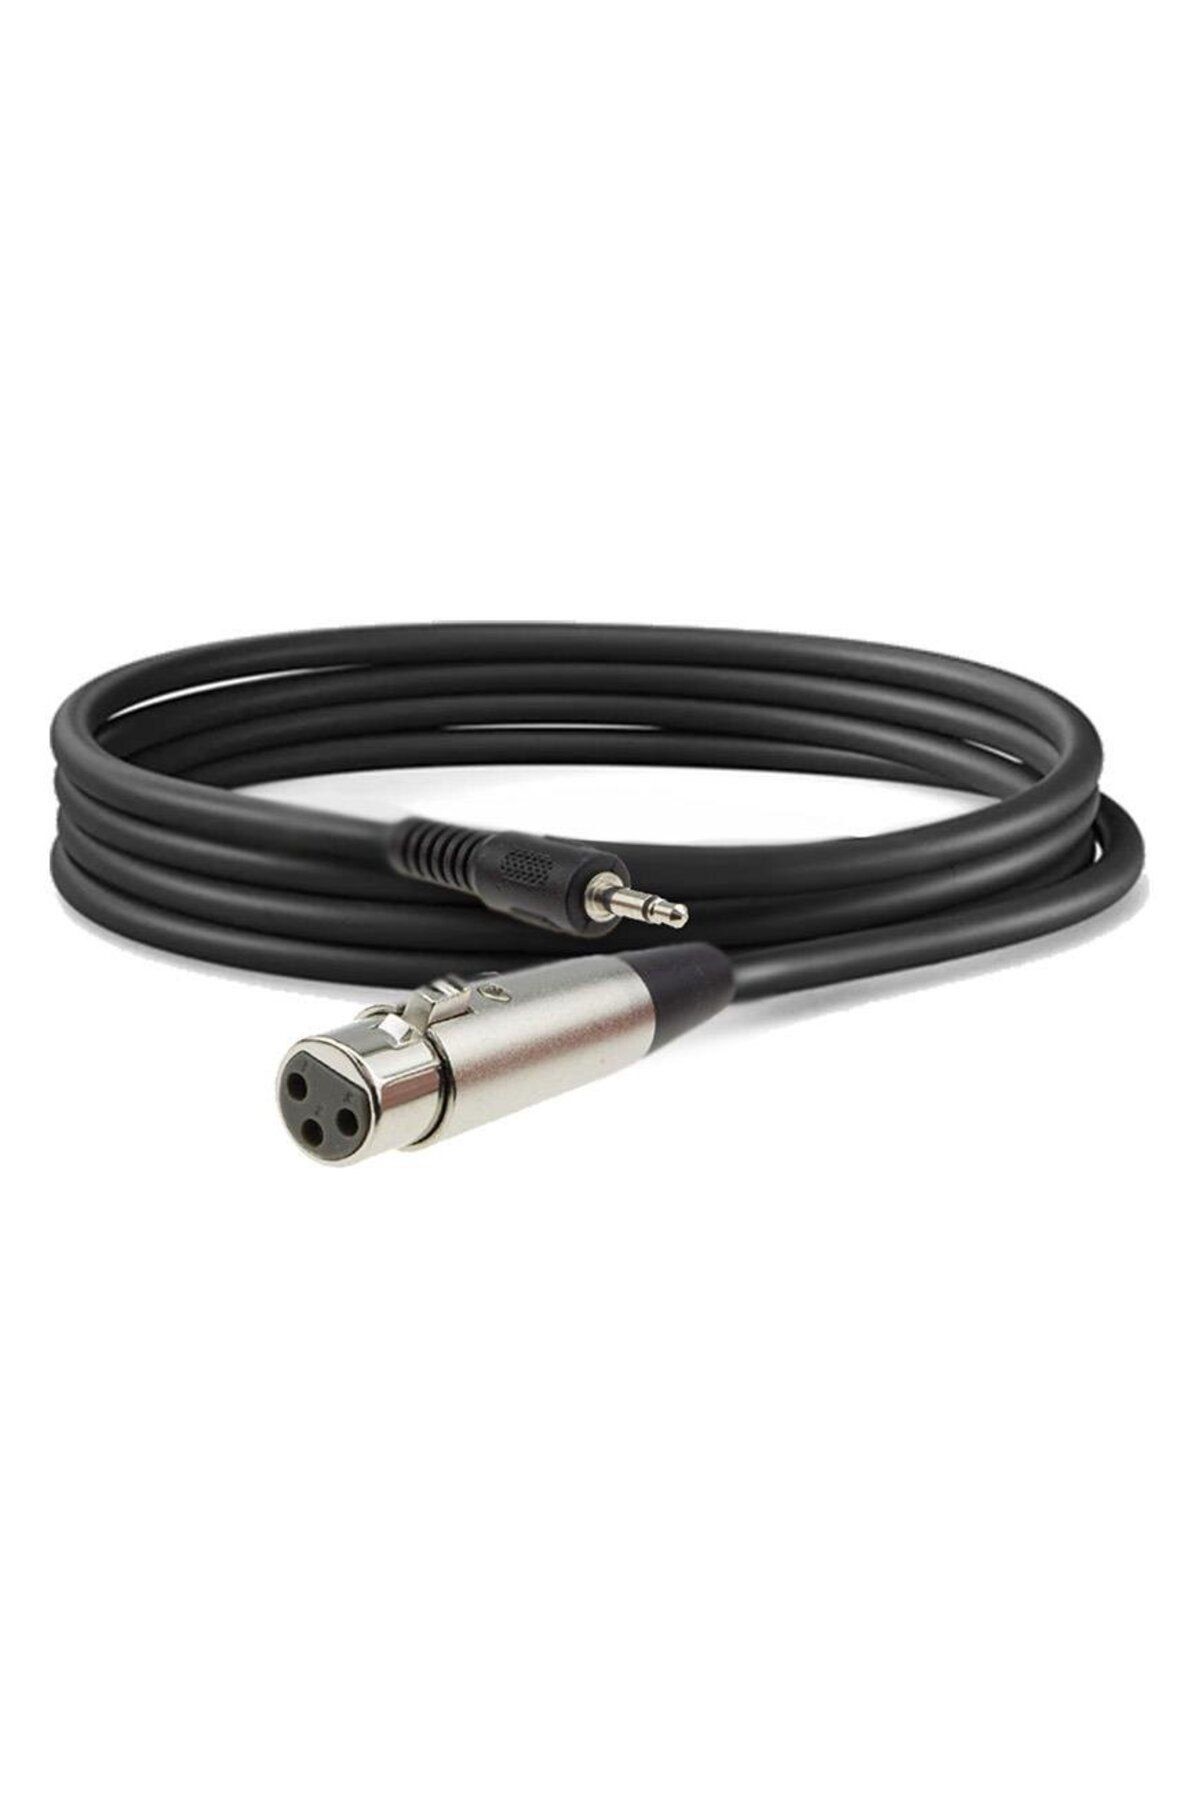 Lastvoice Cable-3ex Mikrofon Kablosu Xlr 3.5 Mm Jack (BM800 KABLOSU)